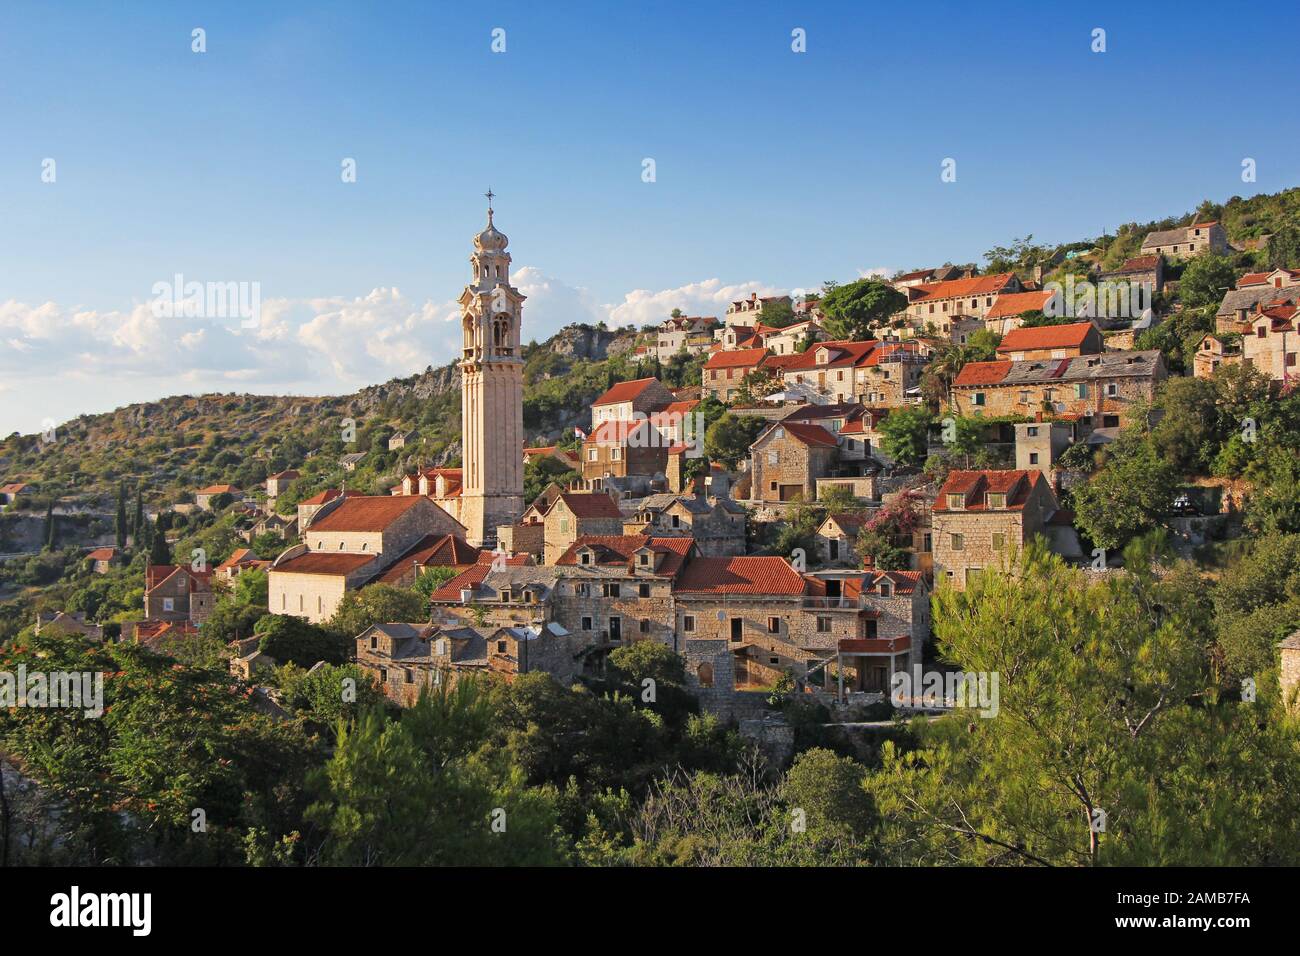 Historic stone village of Lozisca on Brac island, Dalmatia, Croatia Stock Photo